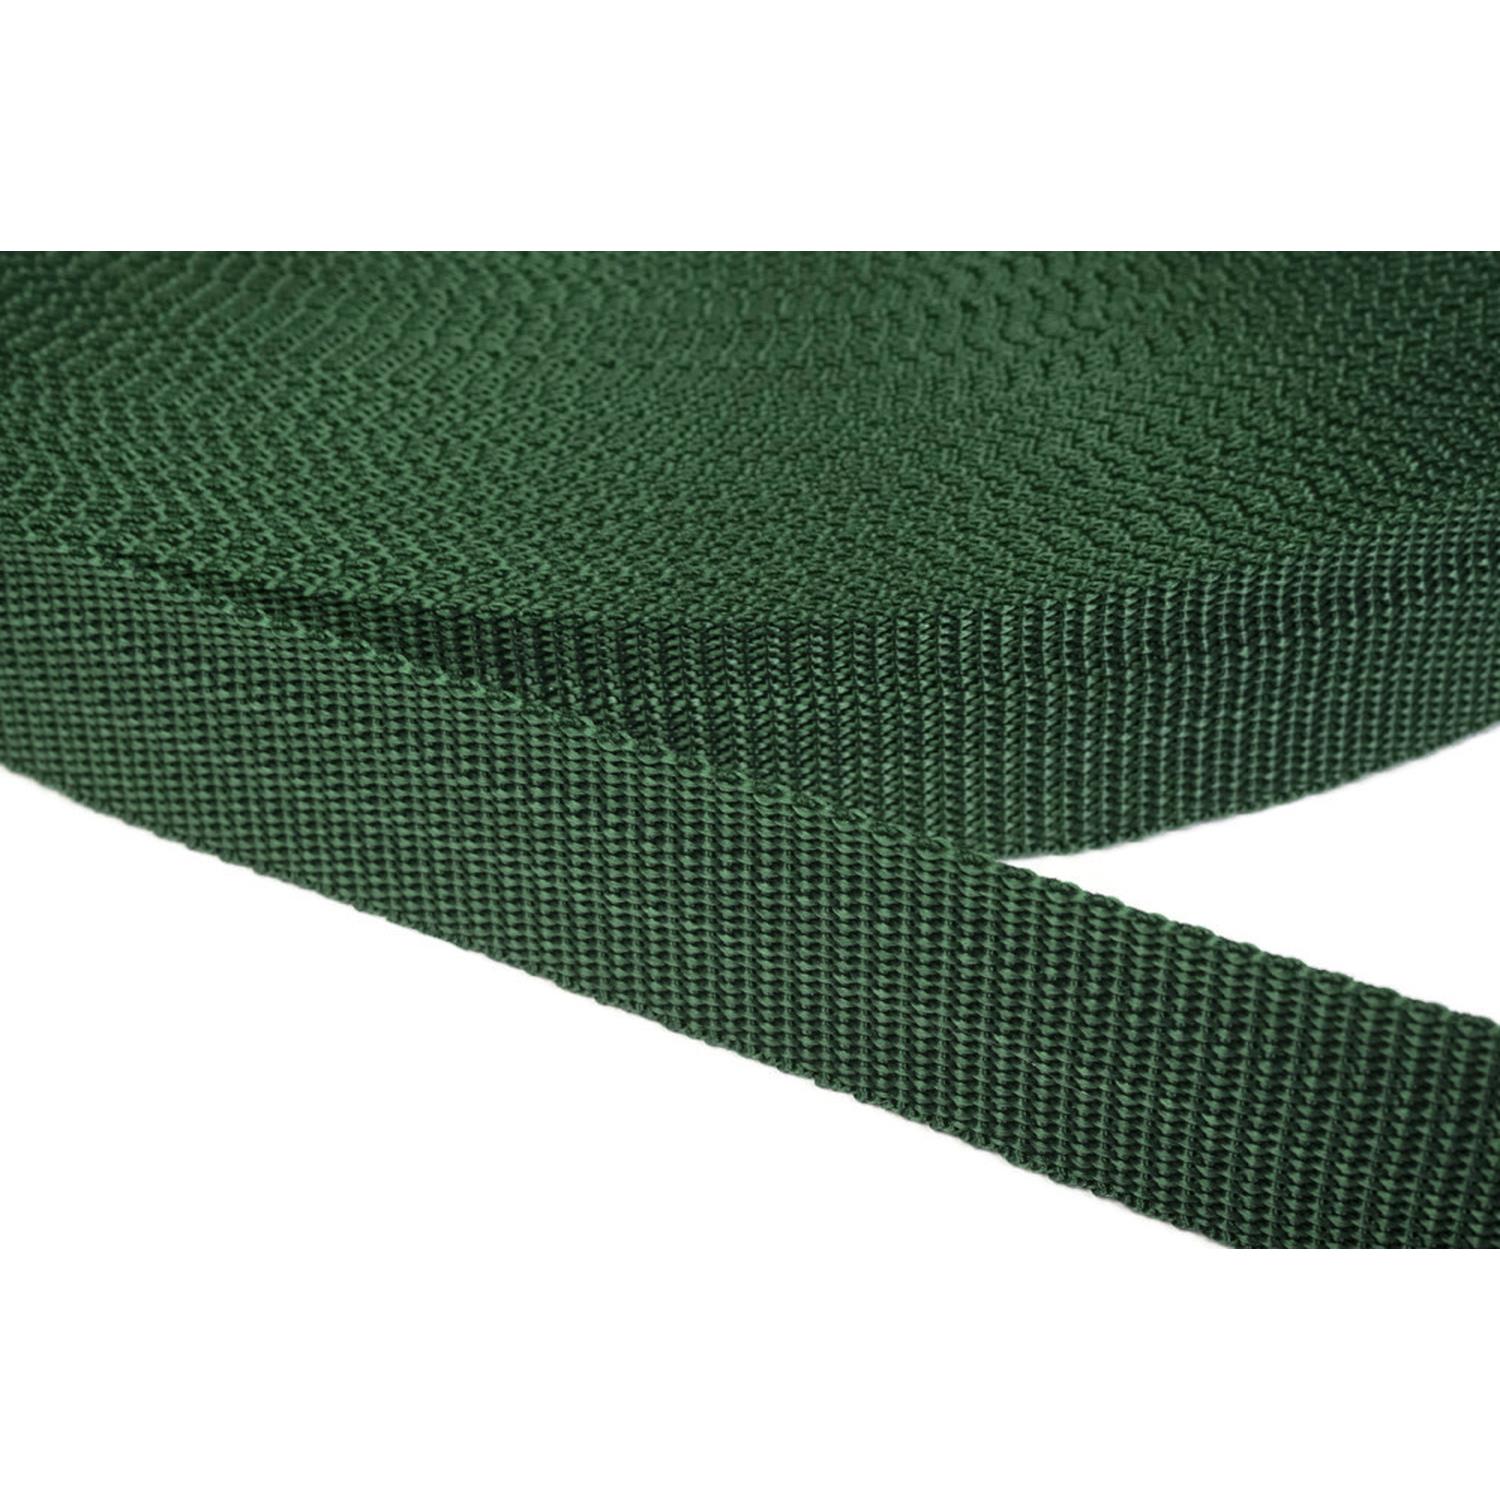 Gurtband 20mm breit aus Polypropylen in 41 Farben 35 - dunkelgrün 06 Meter